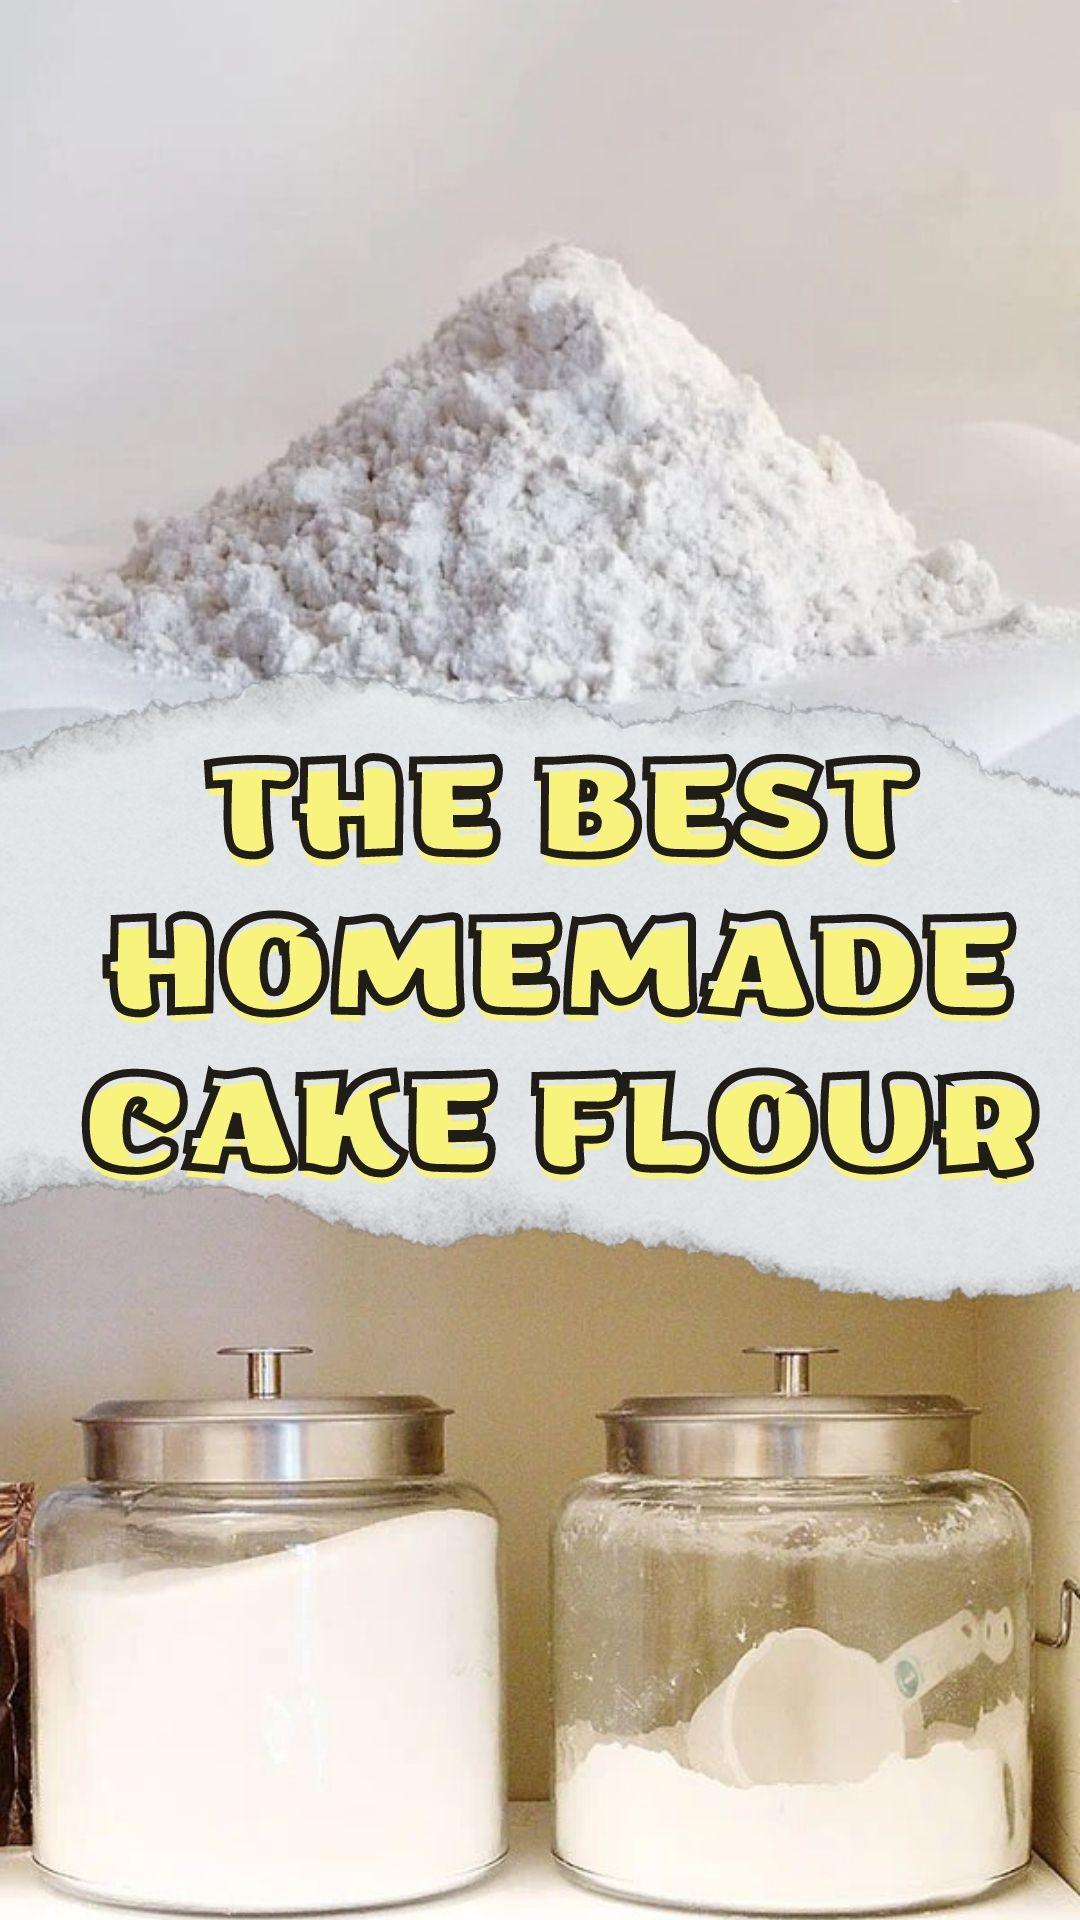 The Best Homemade Cake Flour